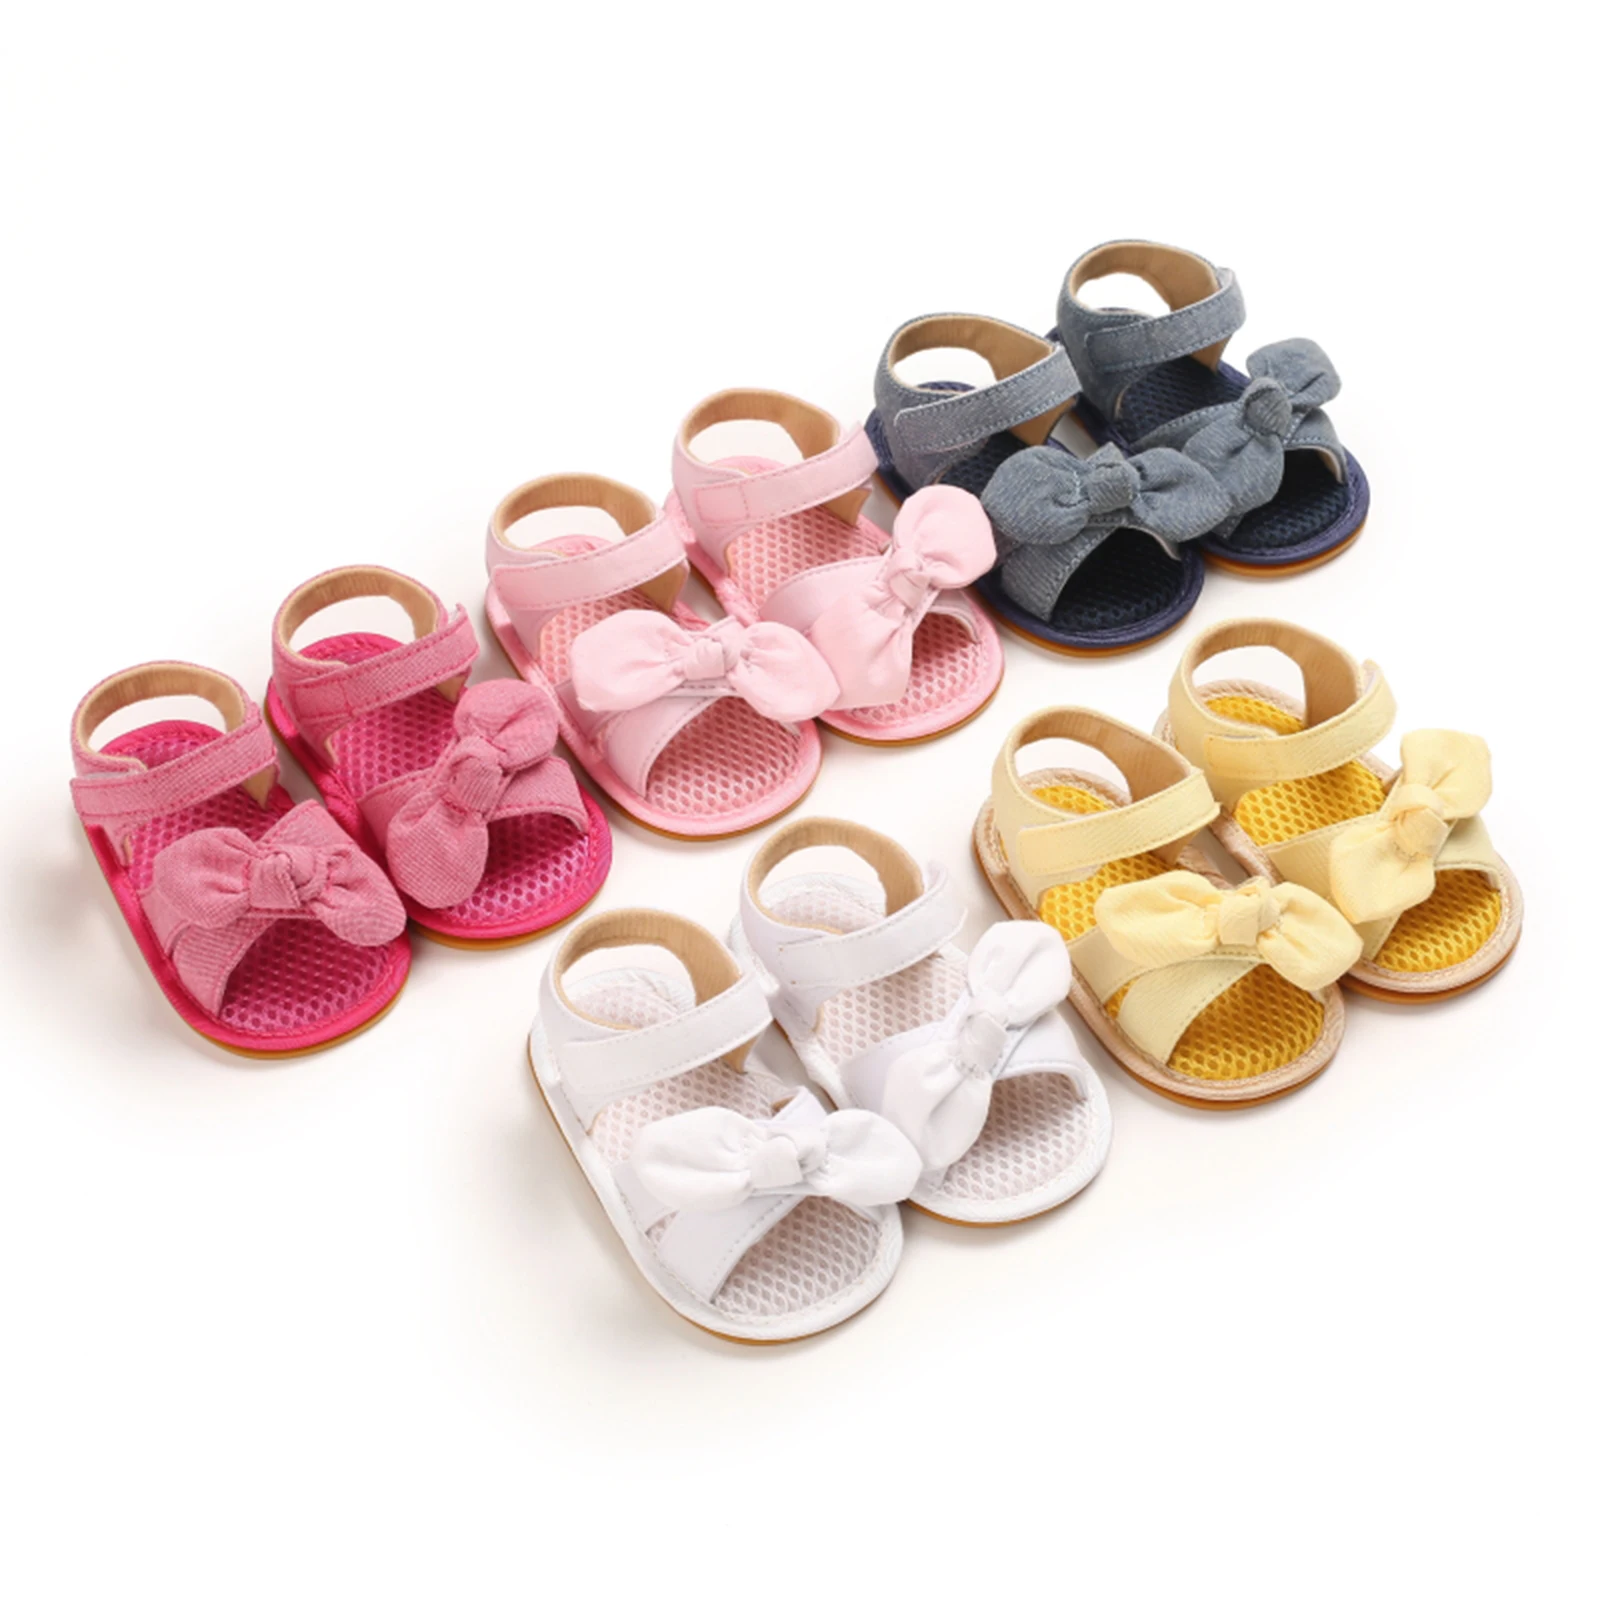 

Newborn Baby Girls Summer Bow Knot Sandals Shoes Fist Walker Soft Sole Non-Slip Infant Toddler Summer Prewalkers Shoes 0-12M